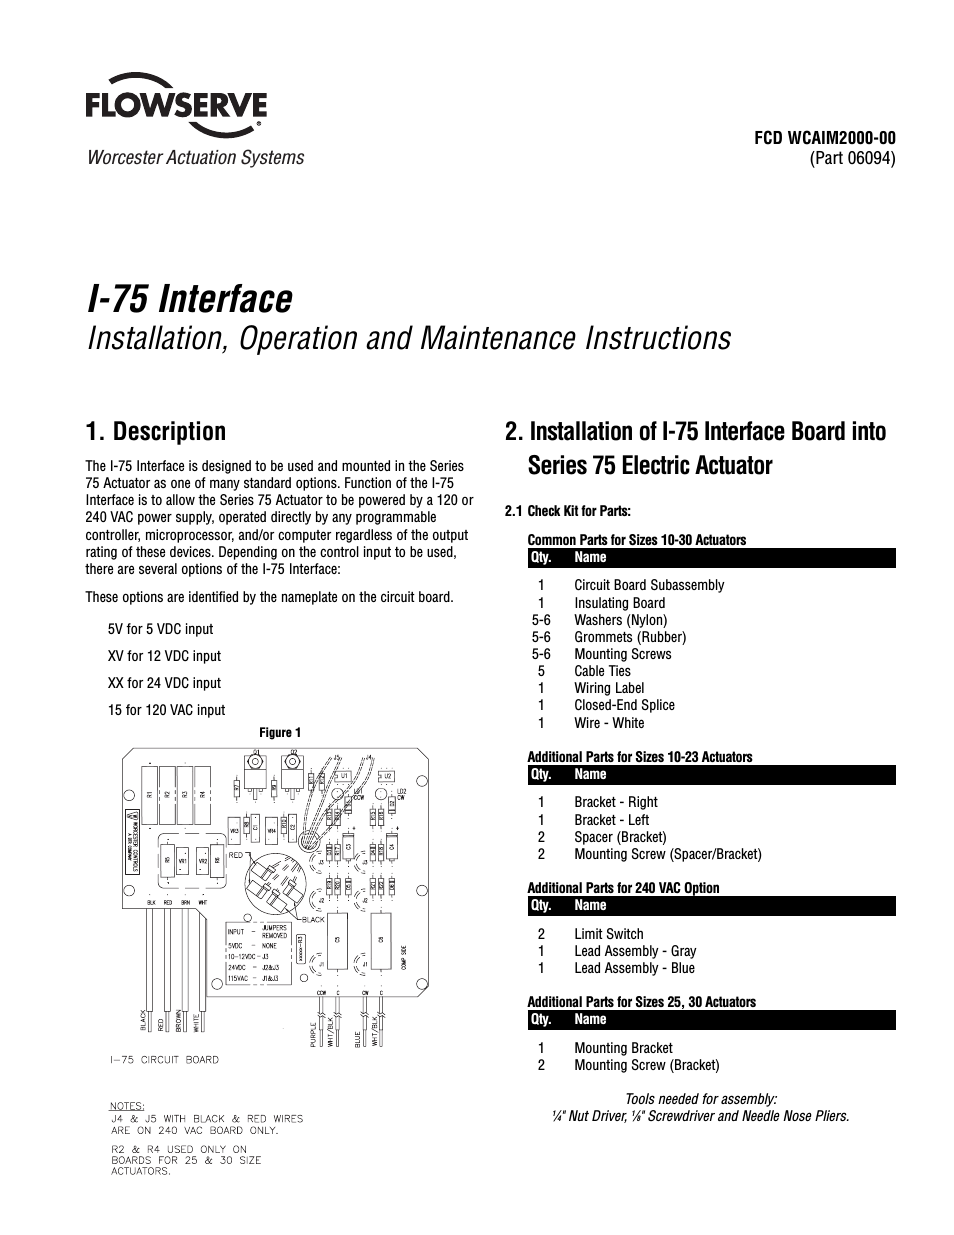 I-75 Interface